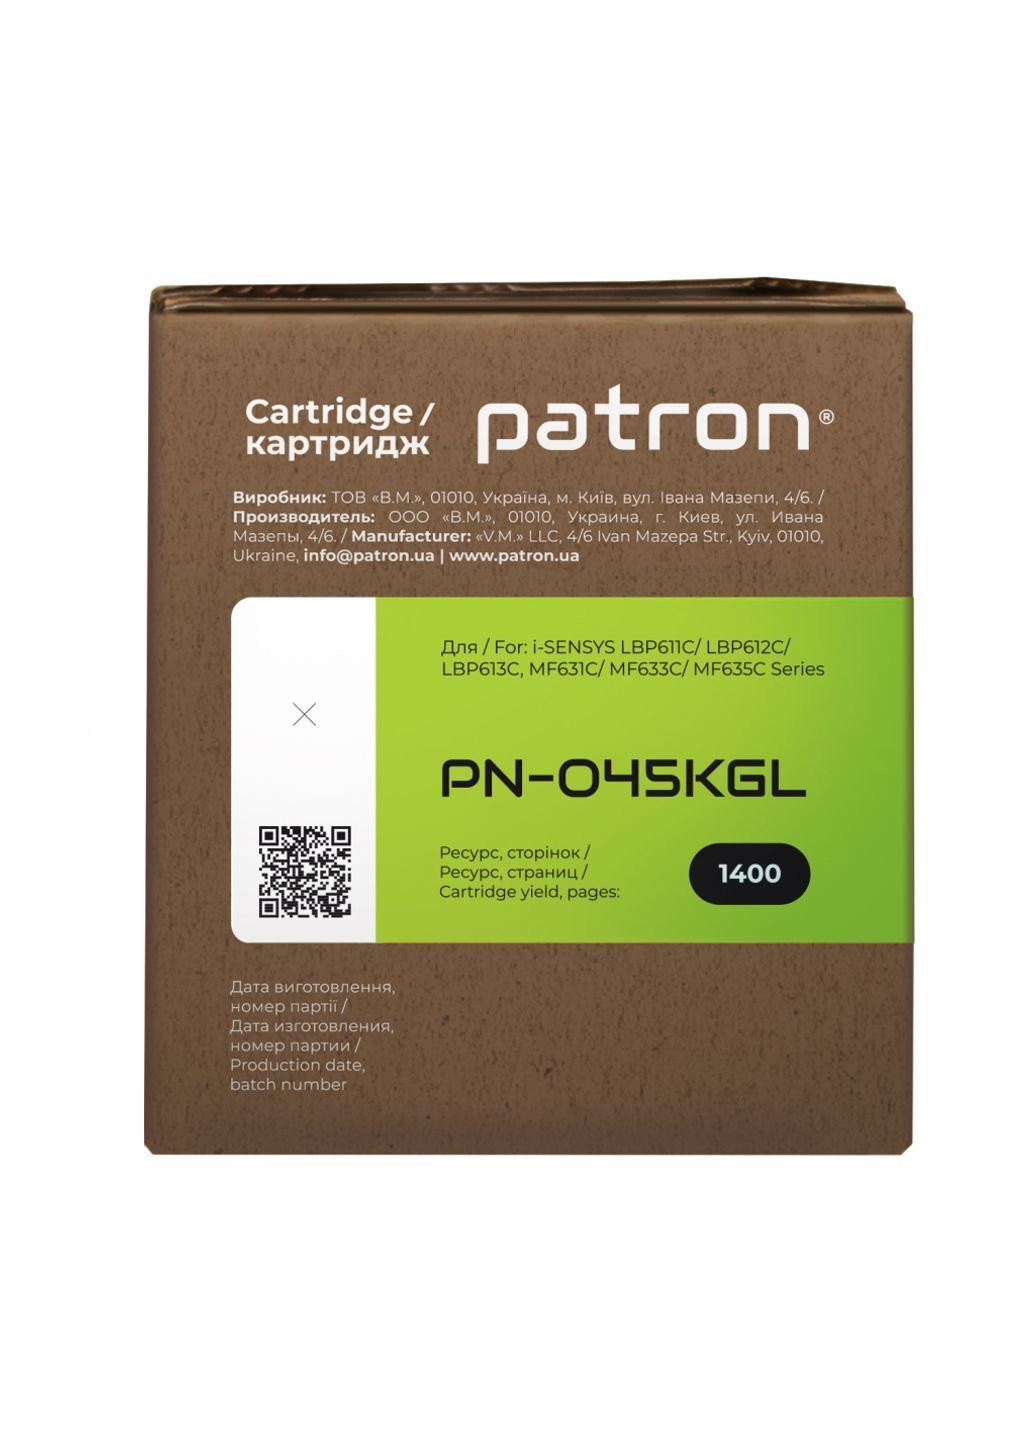 Картридж (PN-045KGL) Patron canon 045 black green label (247618405)